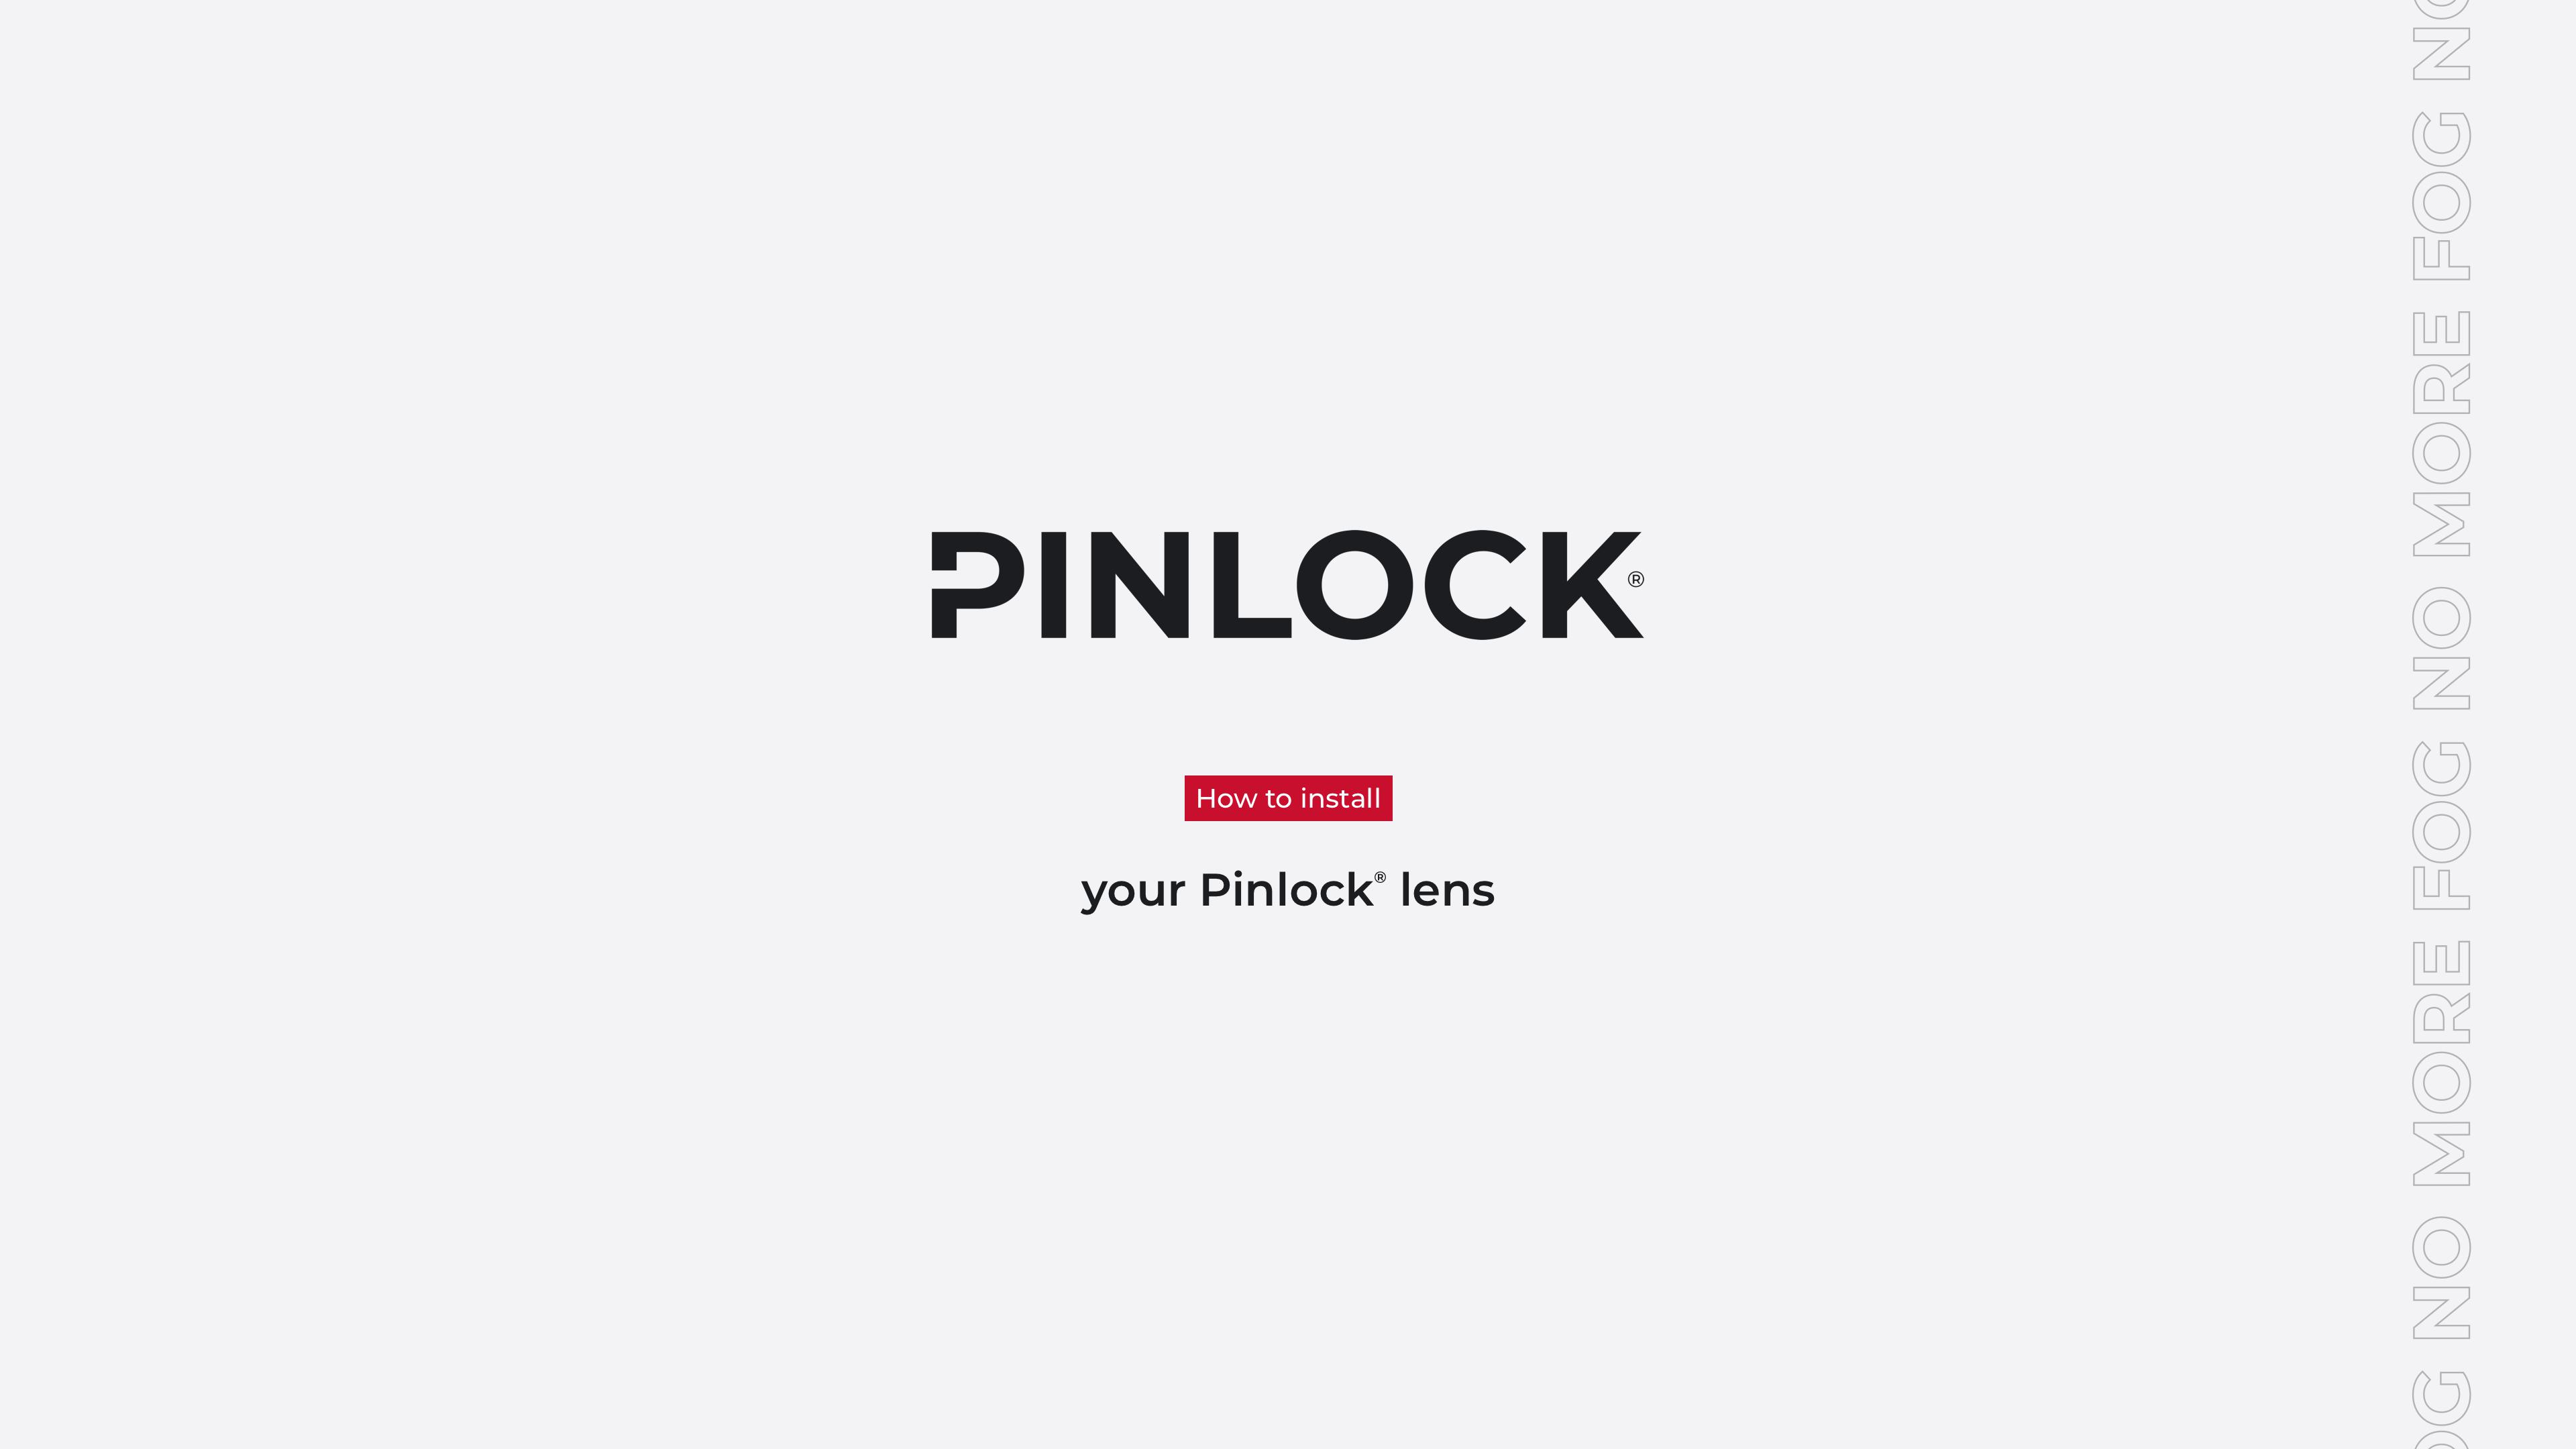 Pinlock 30 Universal Cascos Gari G80 / G81 / G100